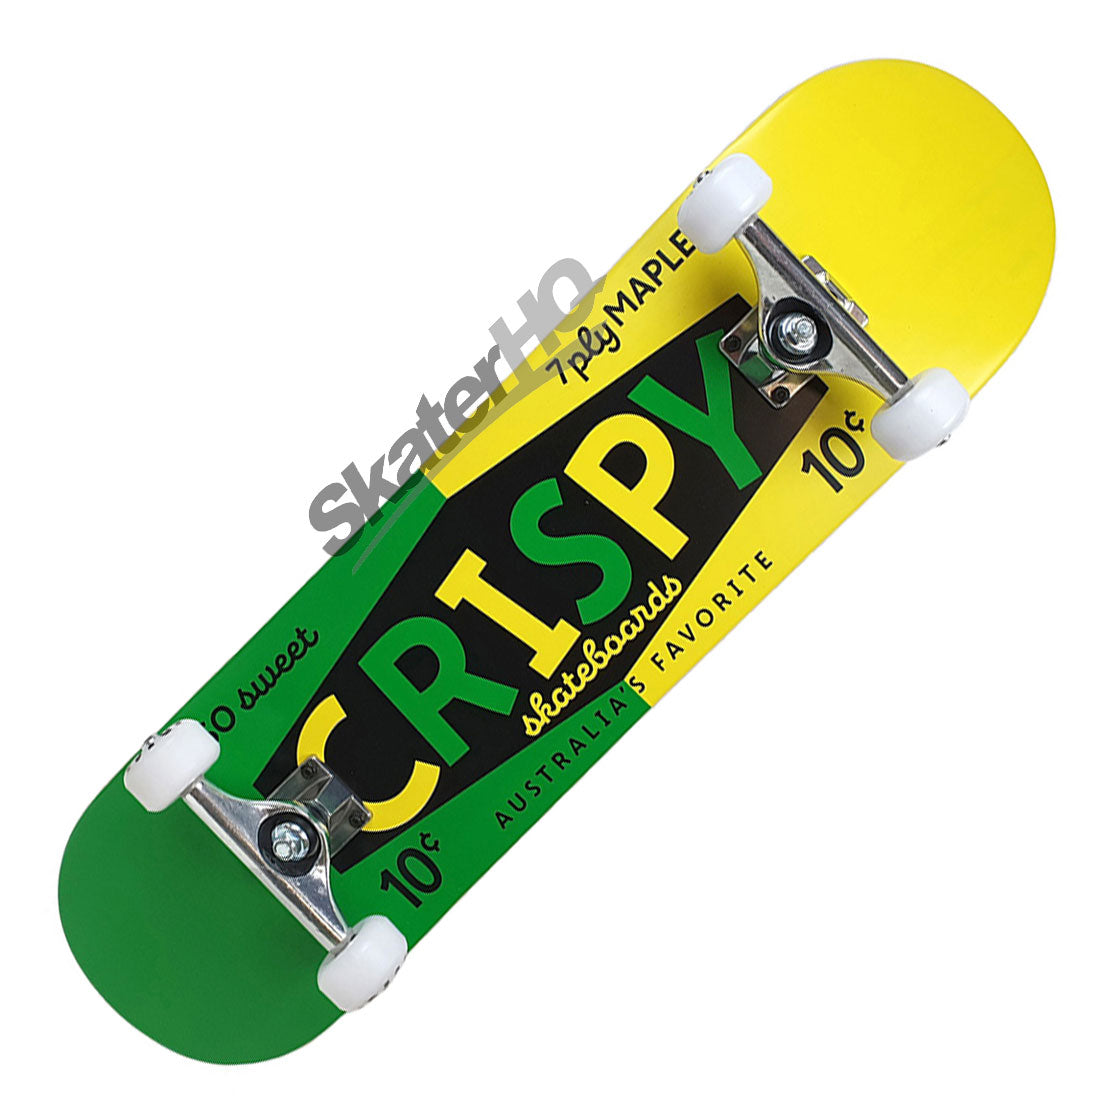 Crispy Rookie So Sweet 8.125 Complete - Green/Yellow Skateboard Completes Modern Street